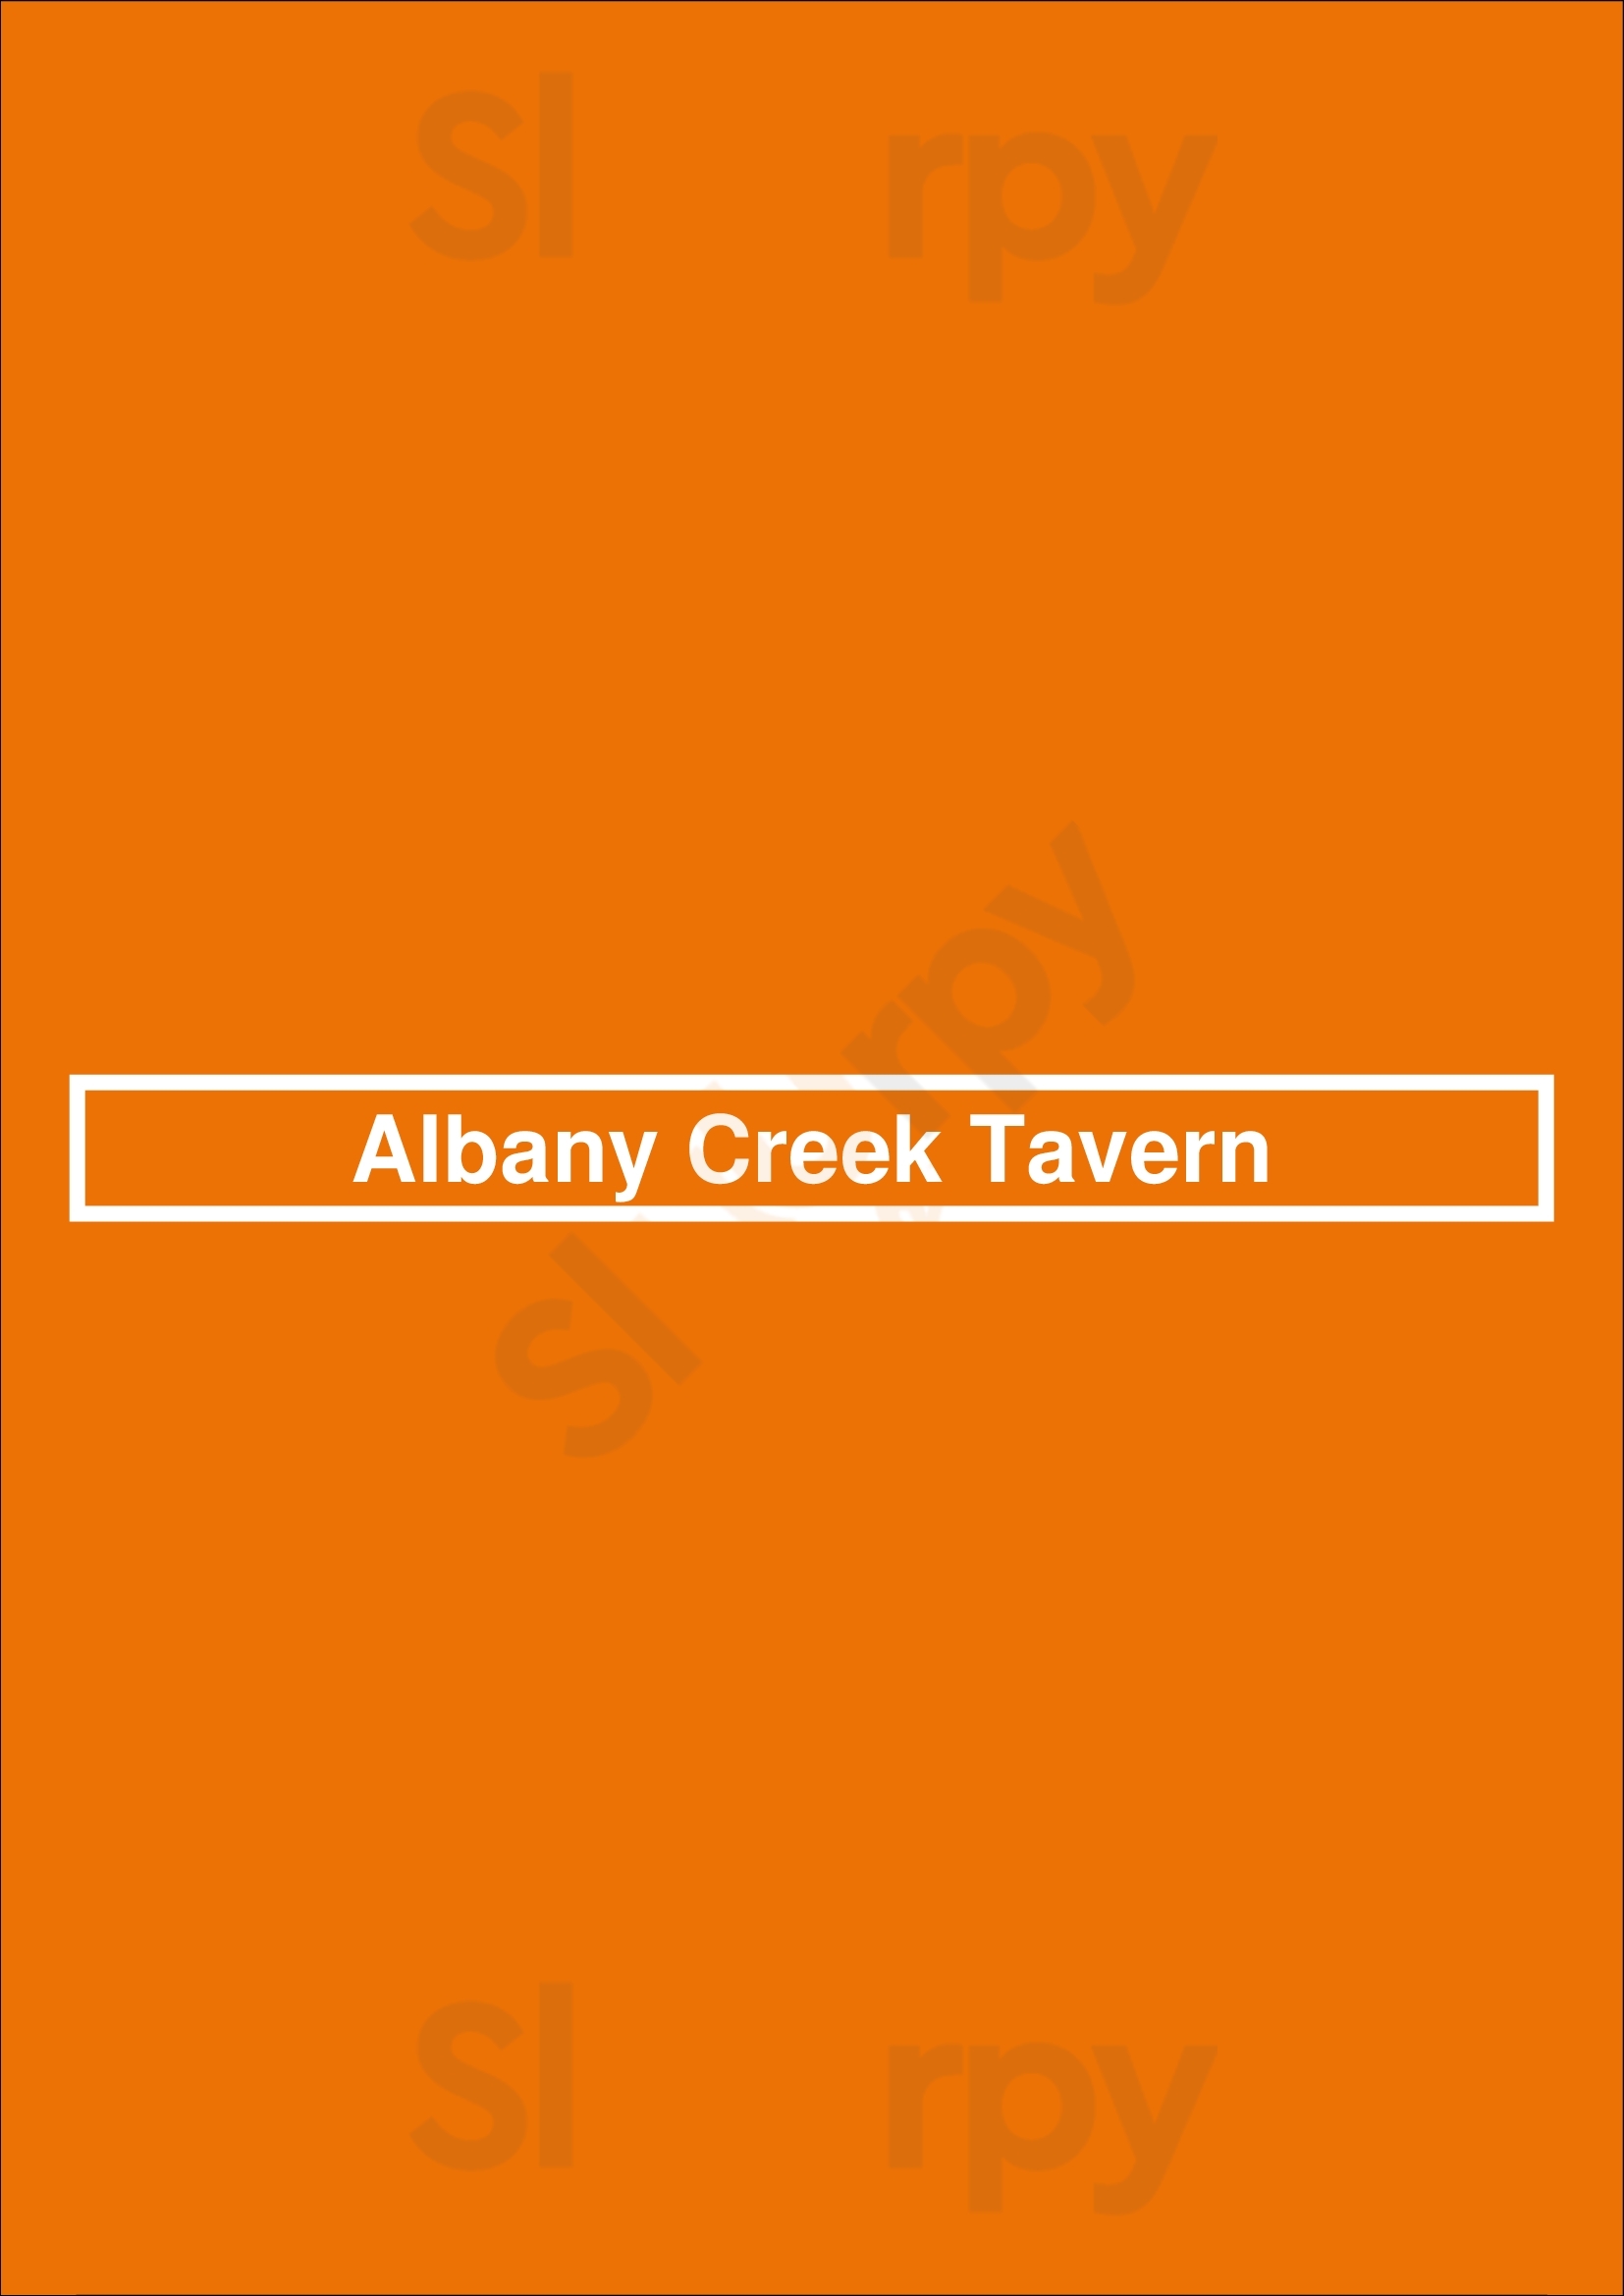 Albany Creek Tavern Albany Creek Menu - 1